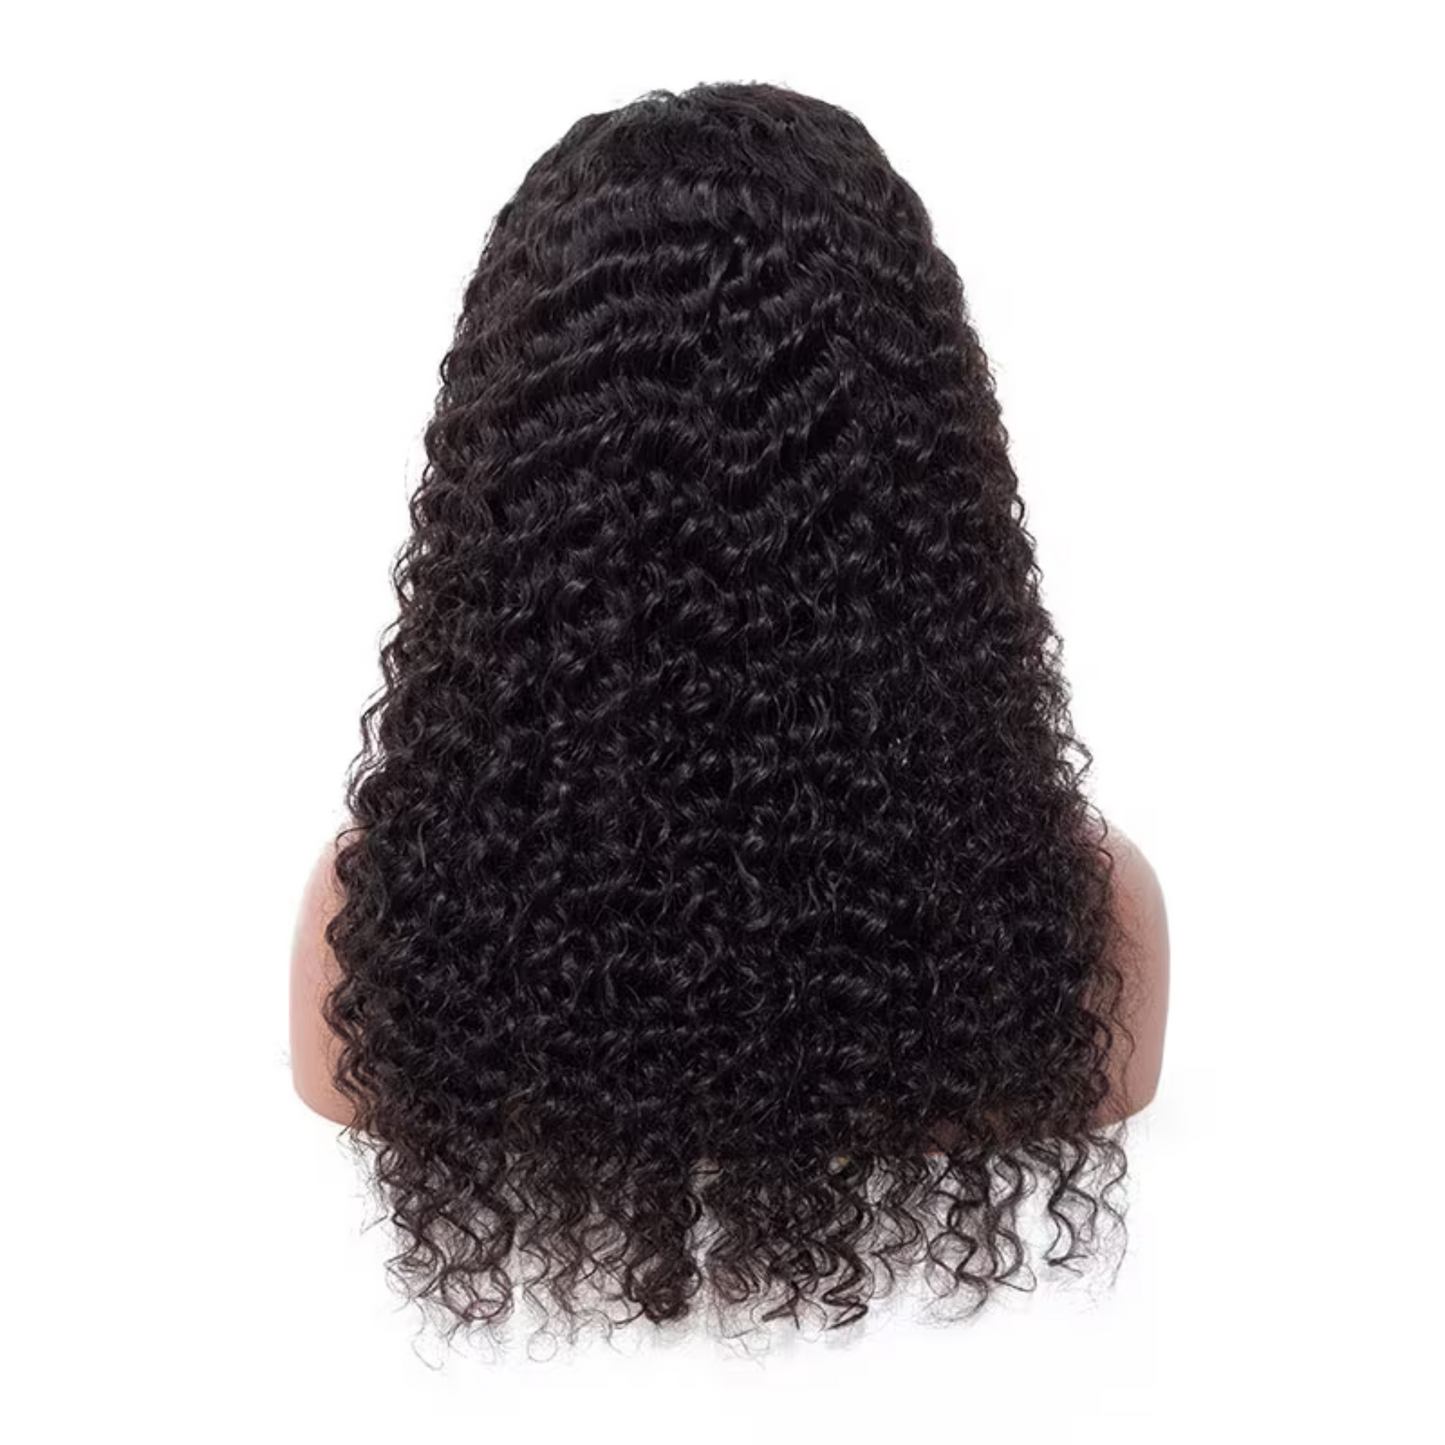 Virgin Deep Curly Closure Wig